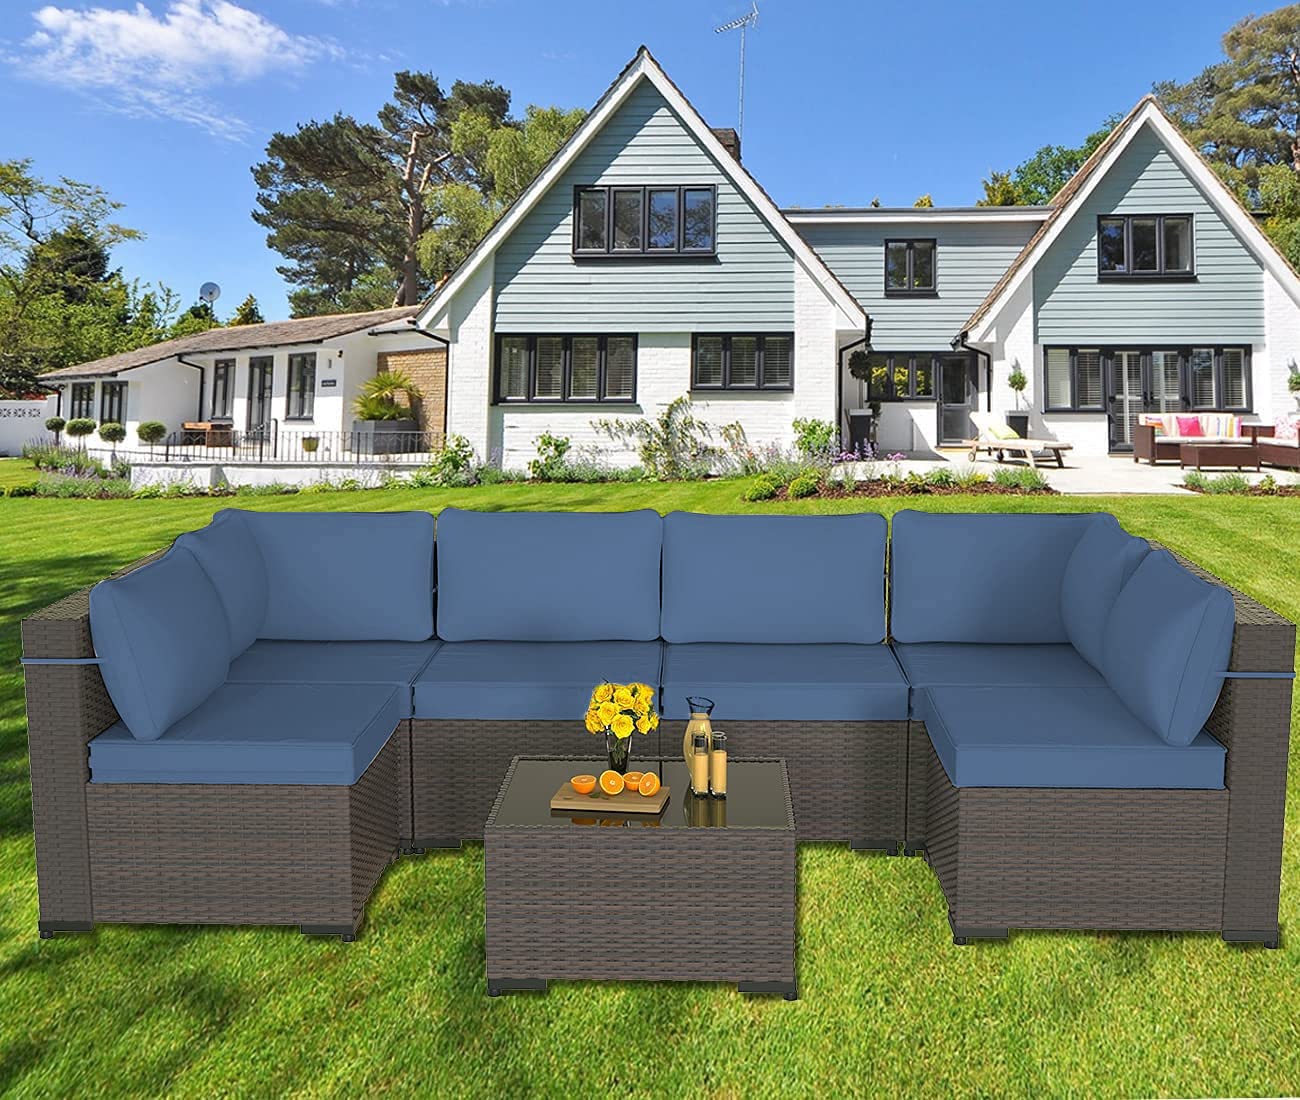 ALAULM 7 Piece Outdoor Patio Furniture Sets, Patio Sectional Sofa - Dark Blue